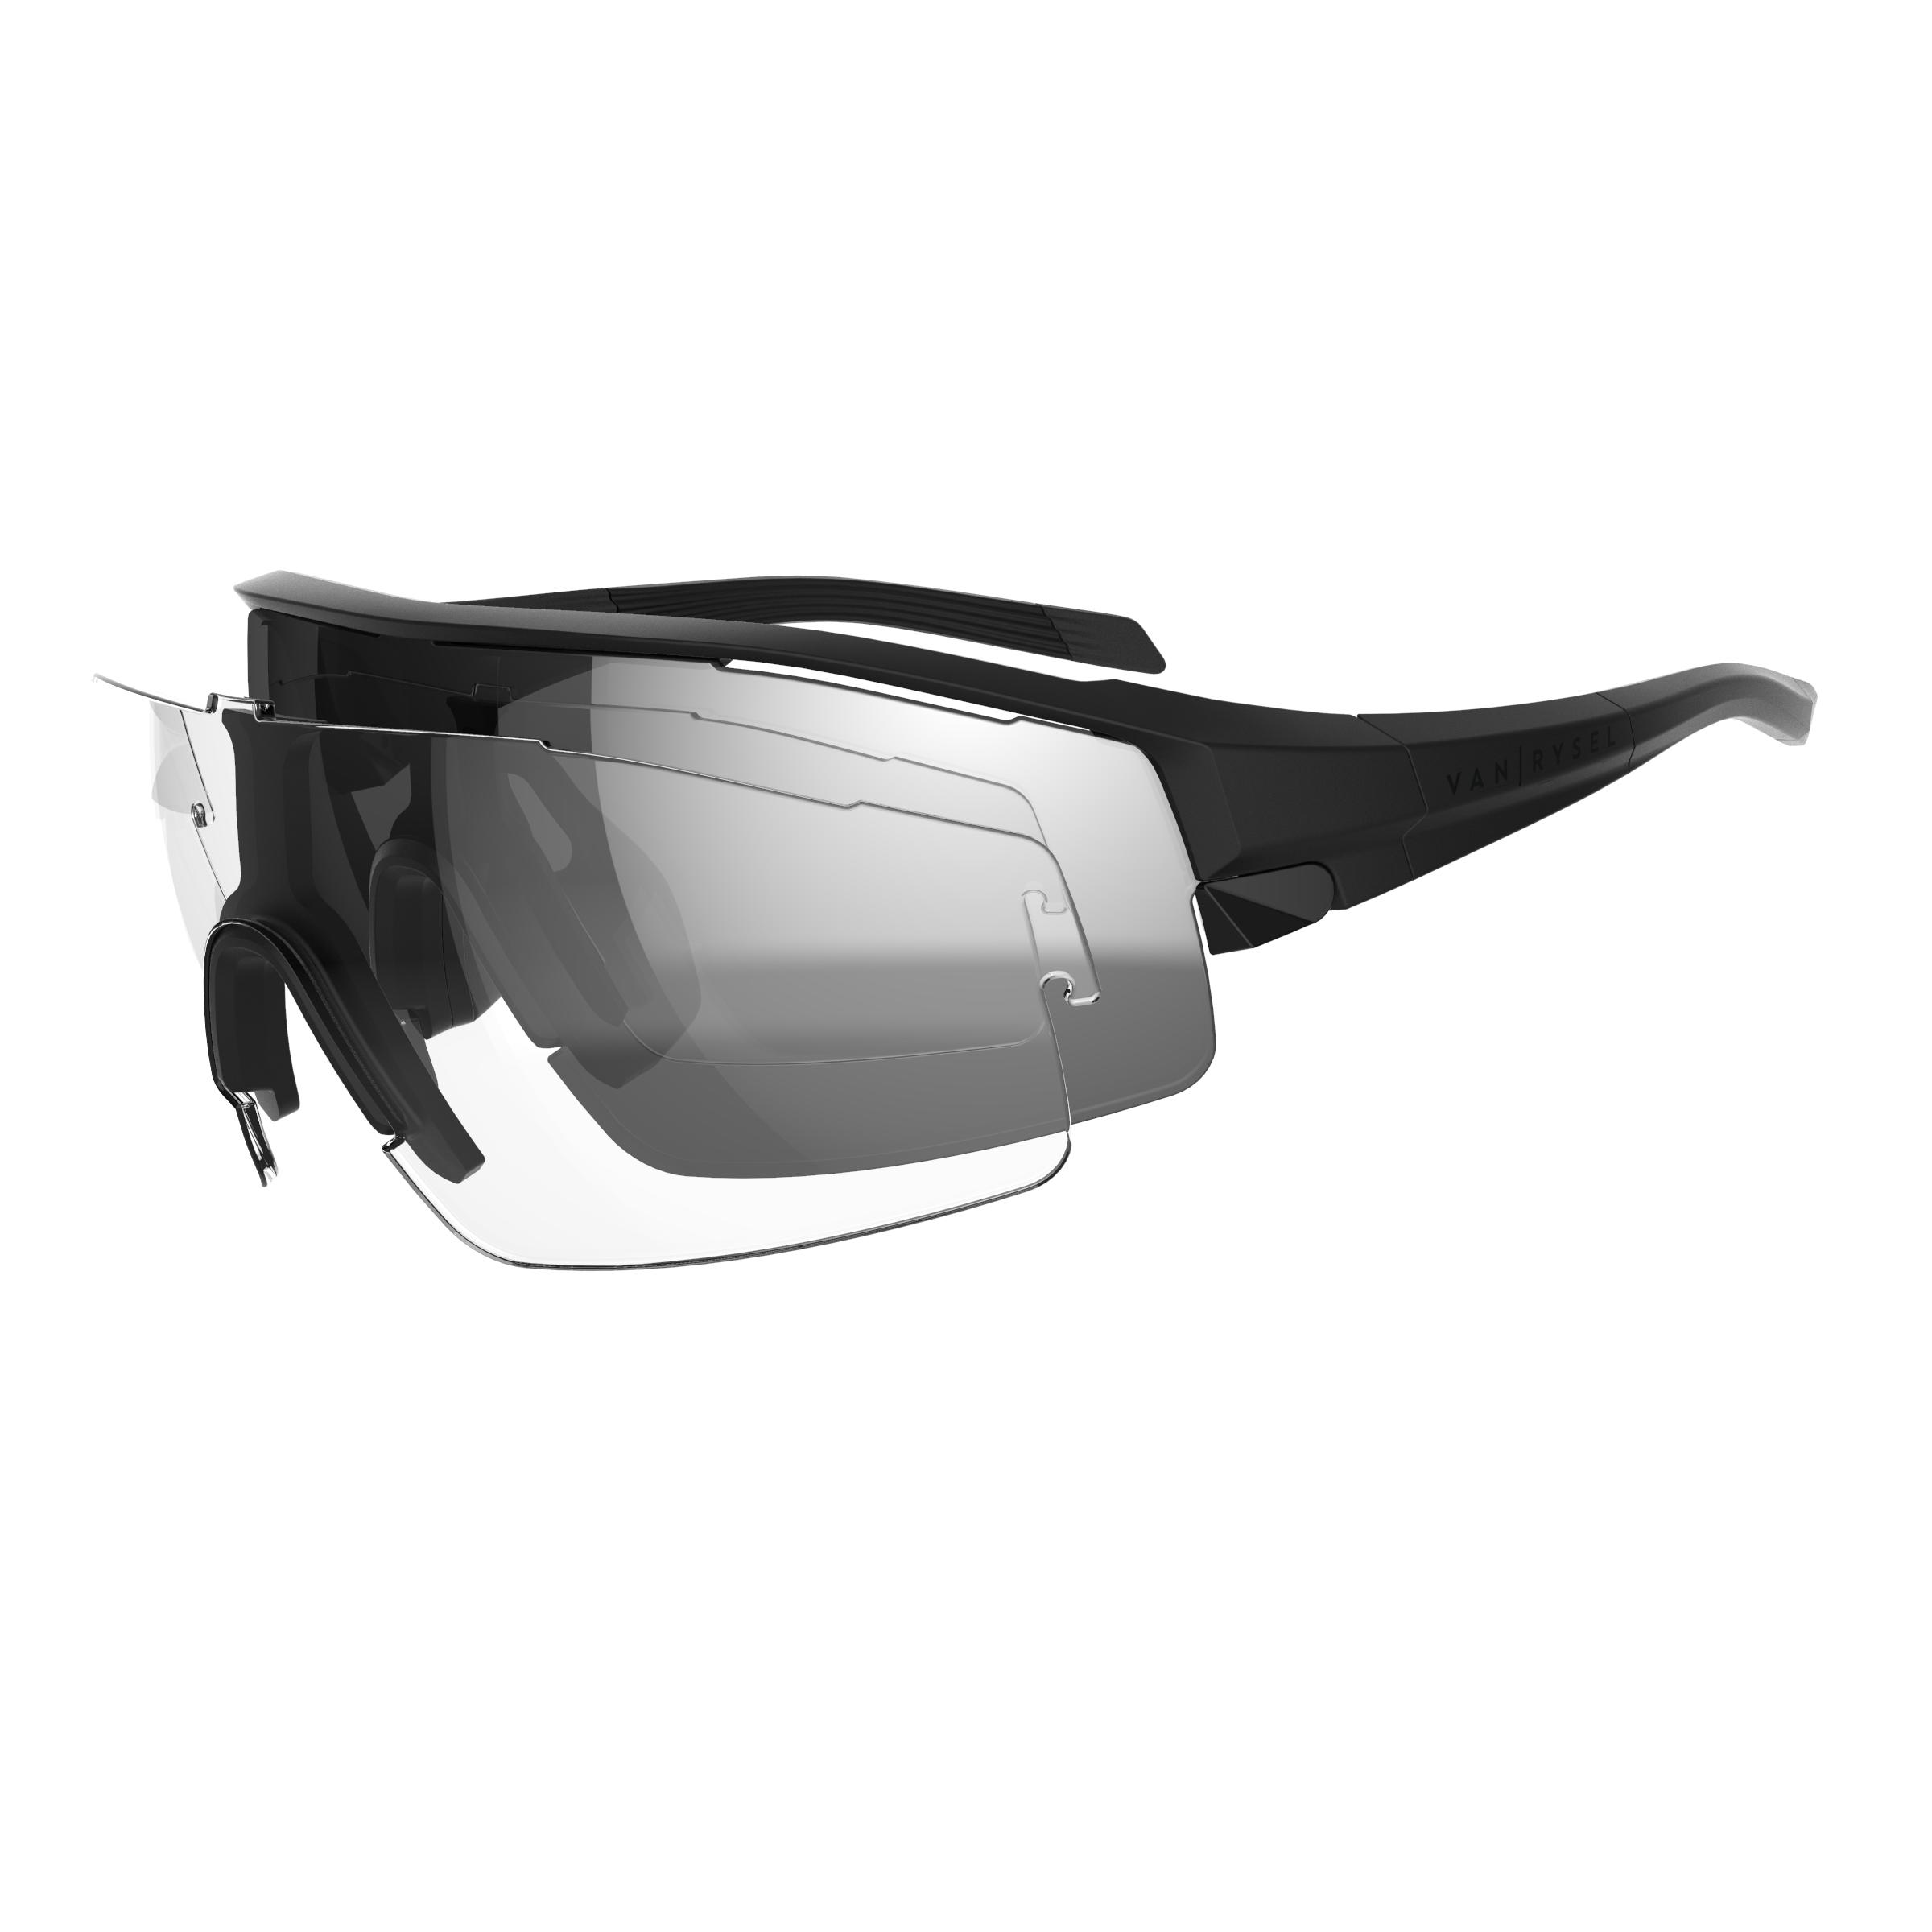 Buy RoadR 900 Adult Cycling Glasses - Black Online | Decathlon